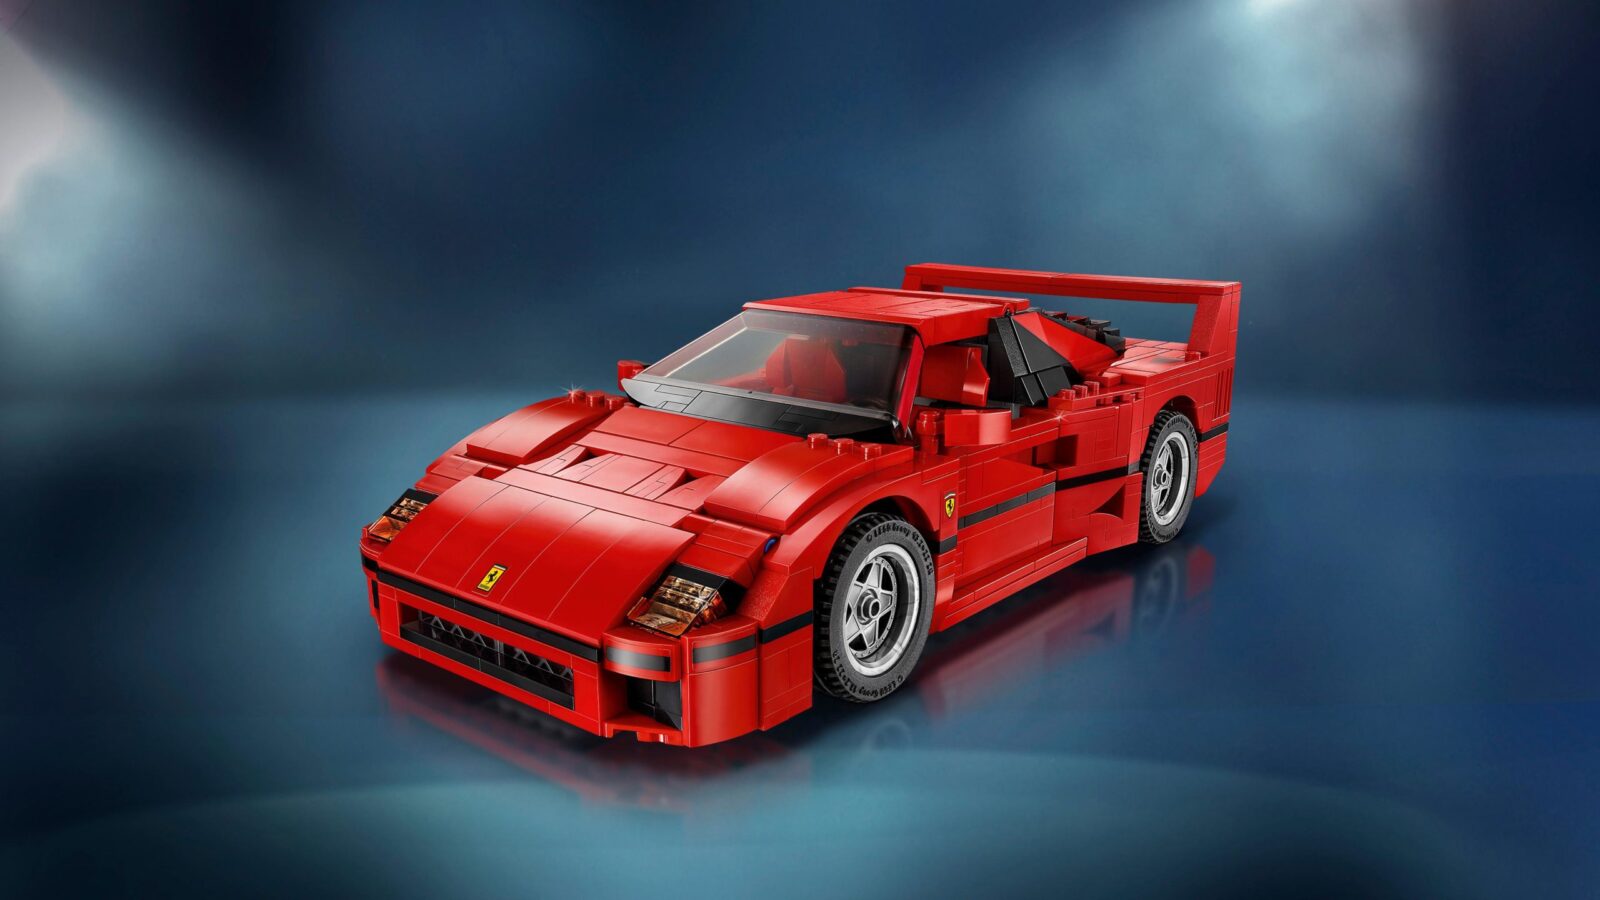 Lego Creator Expert Ferrari F40 Construction Set